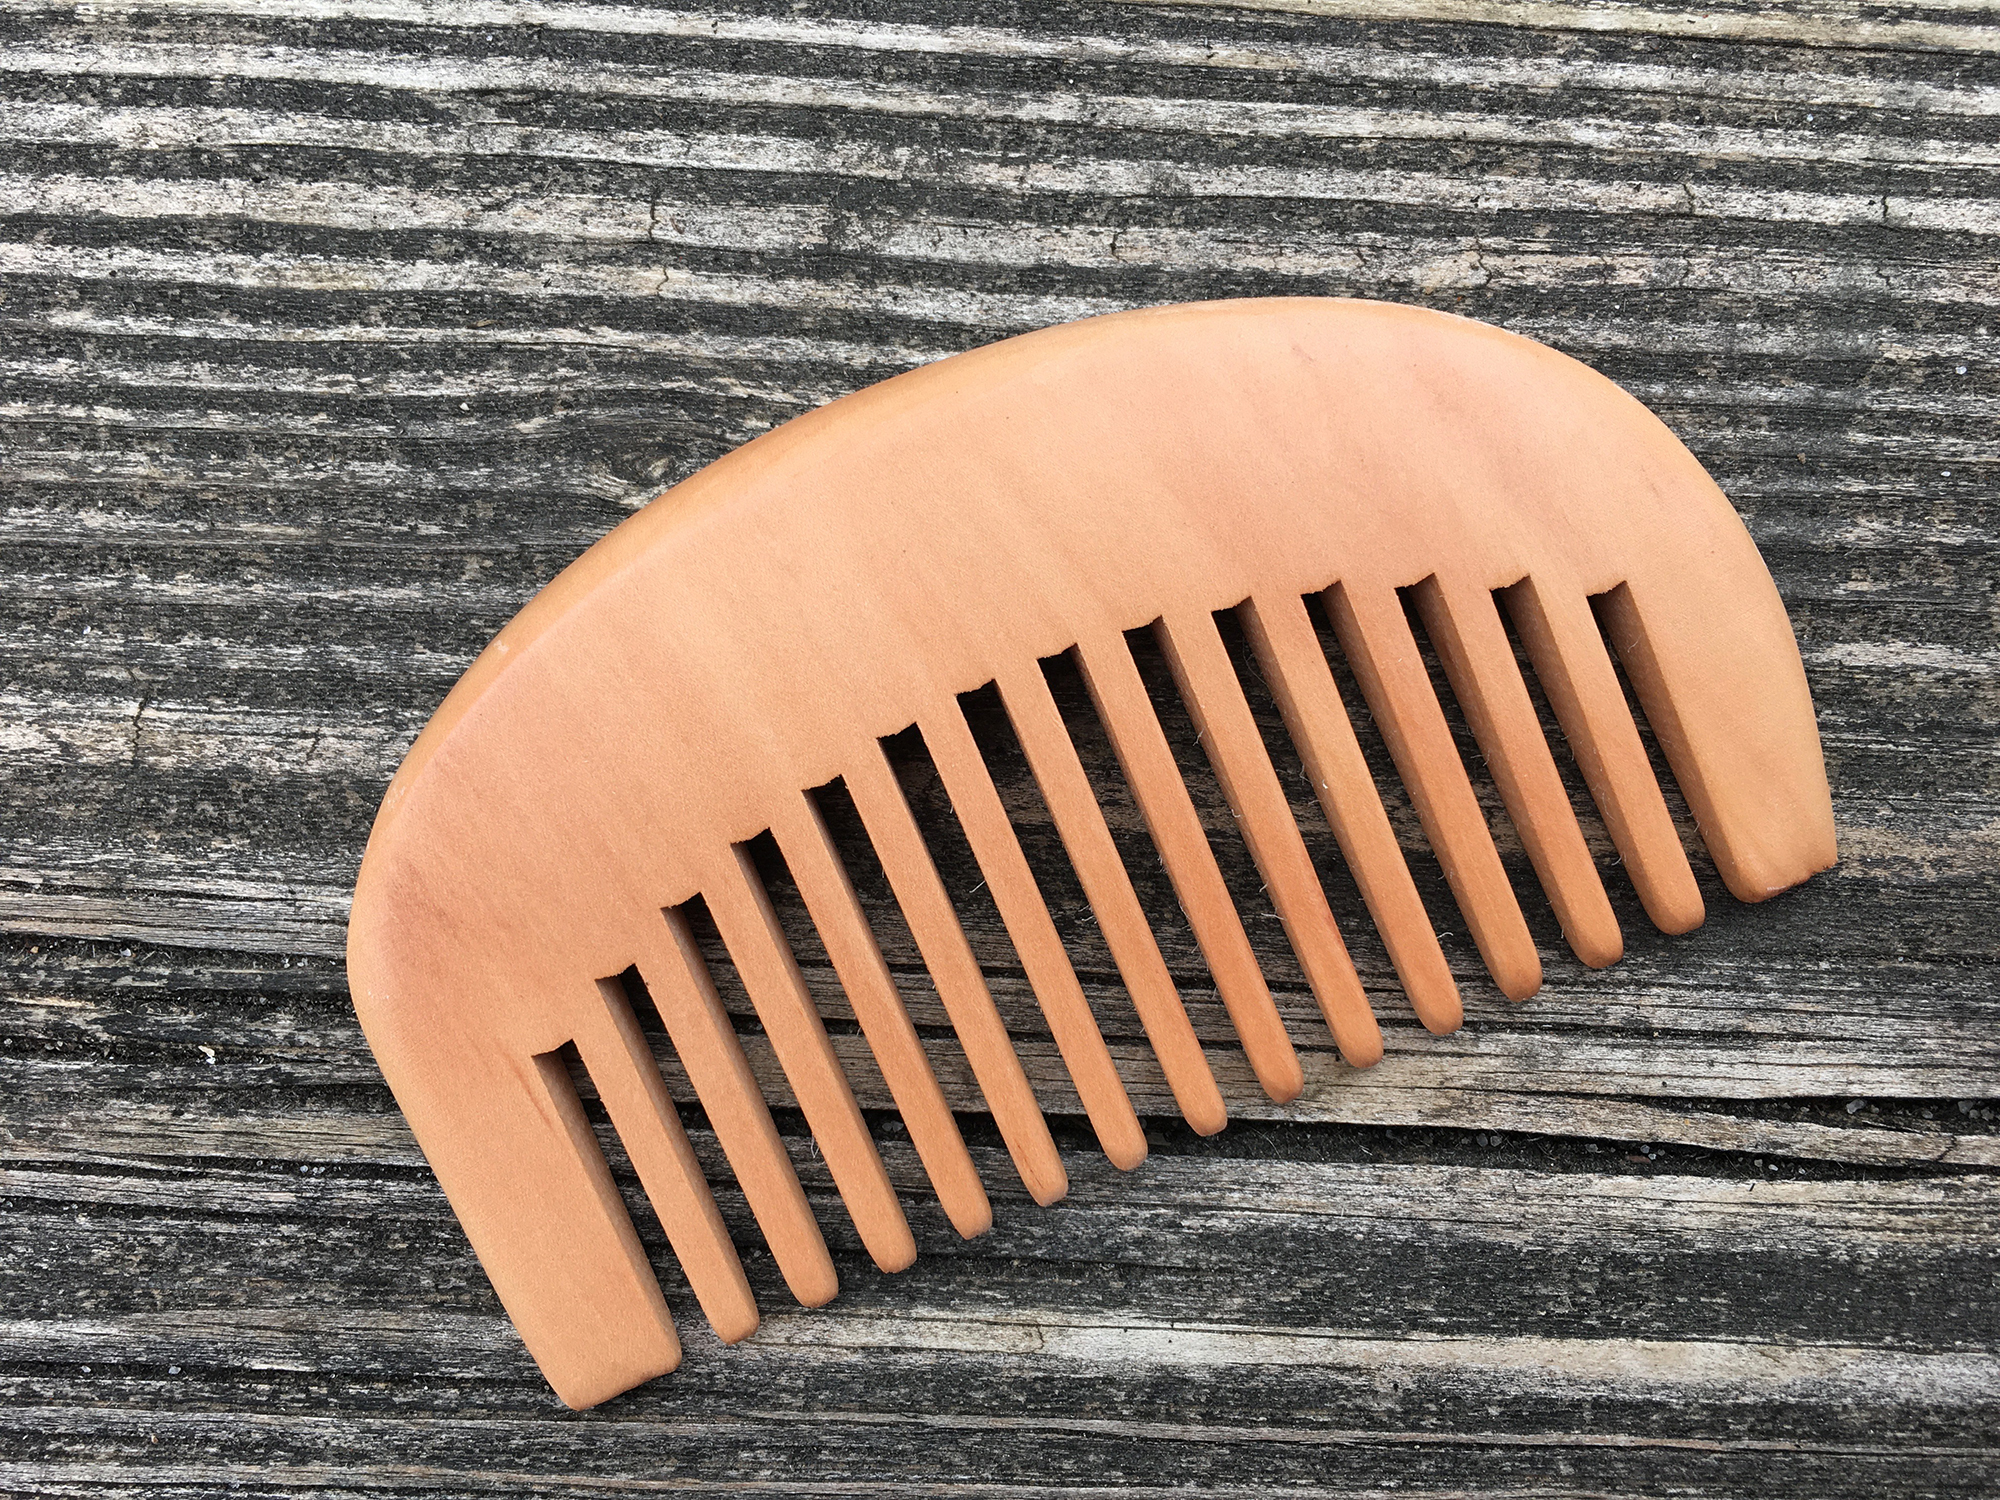 5 O' Clock Shadow Beard Comb - Click to
Enlarge Photo